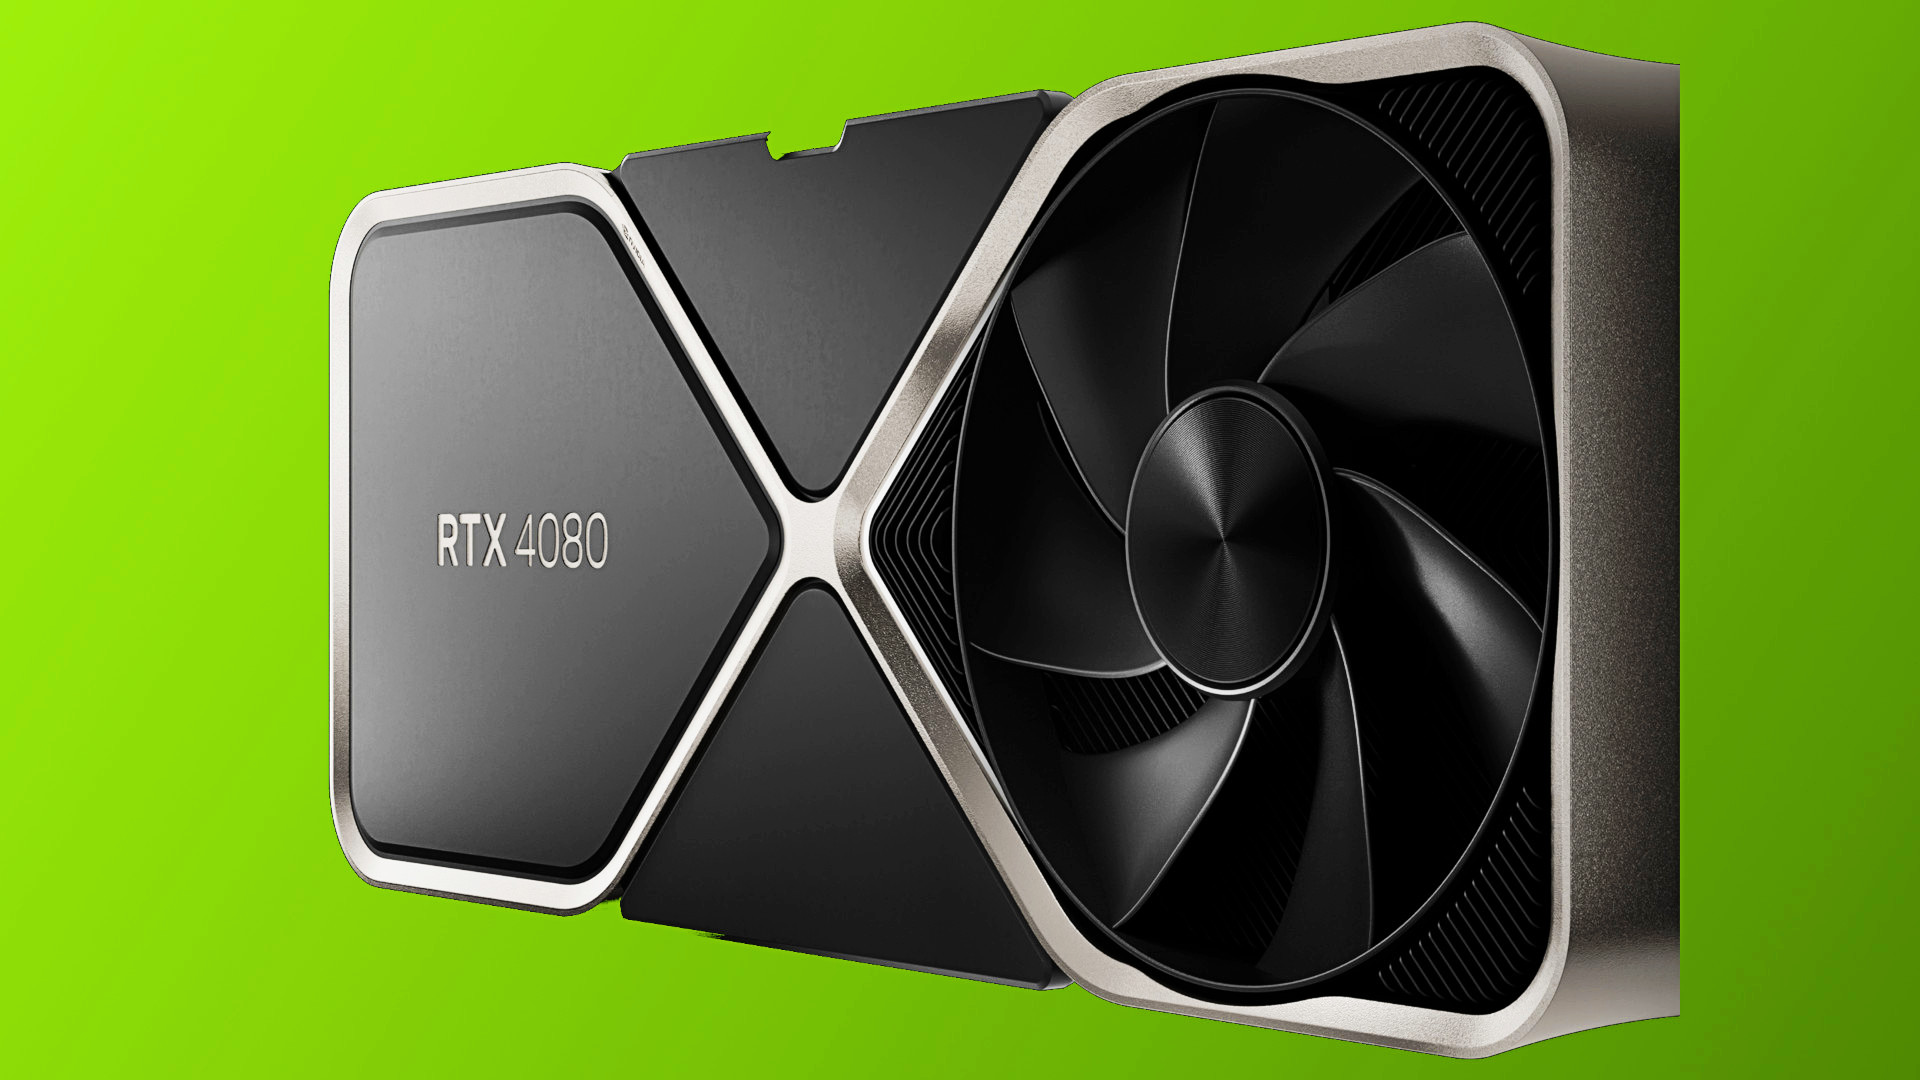 Nvidia RTX 4080 12GB GPU performance falls behind the 16GB model